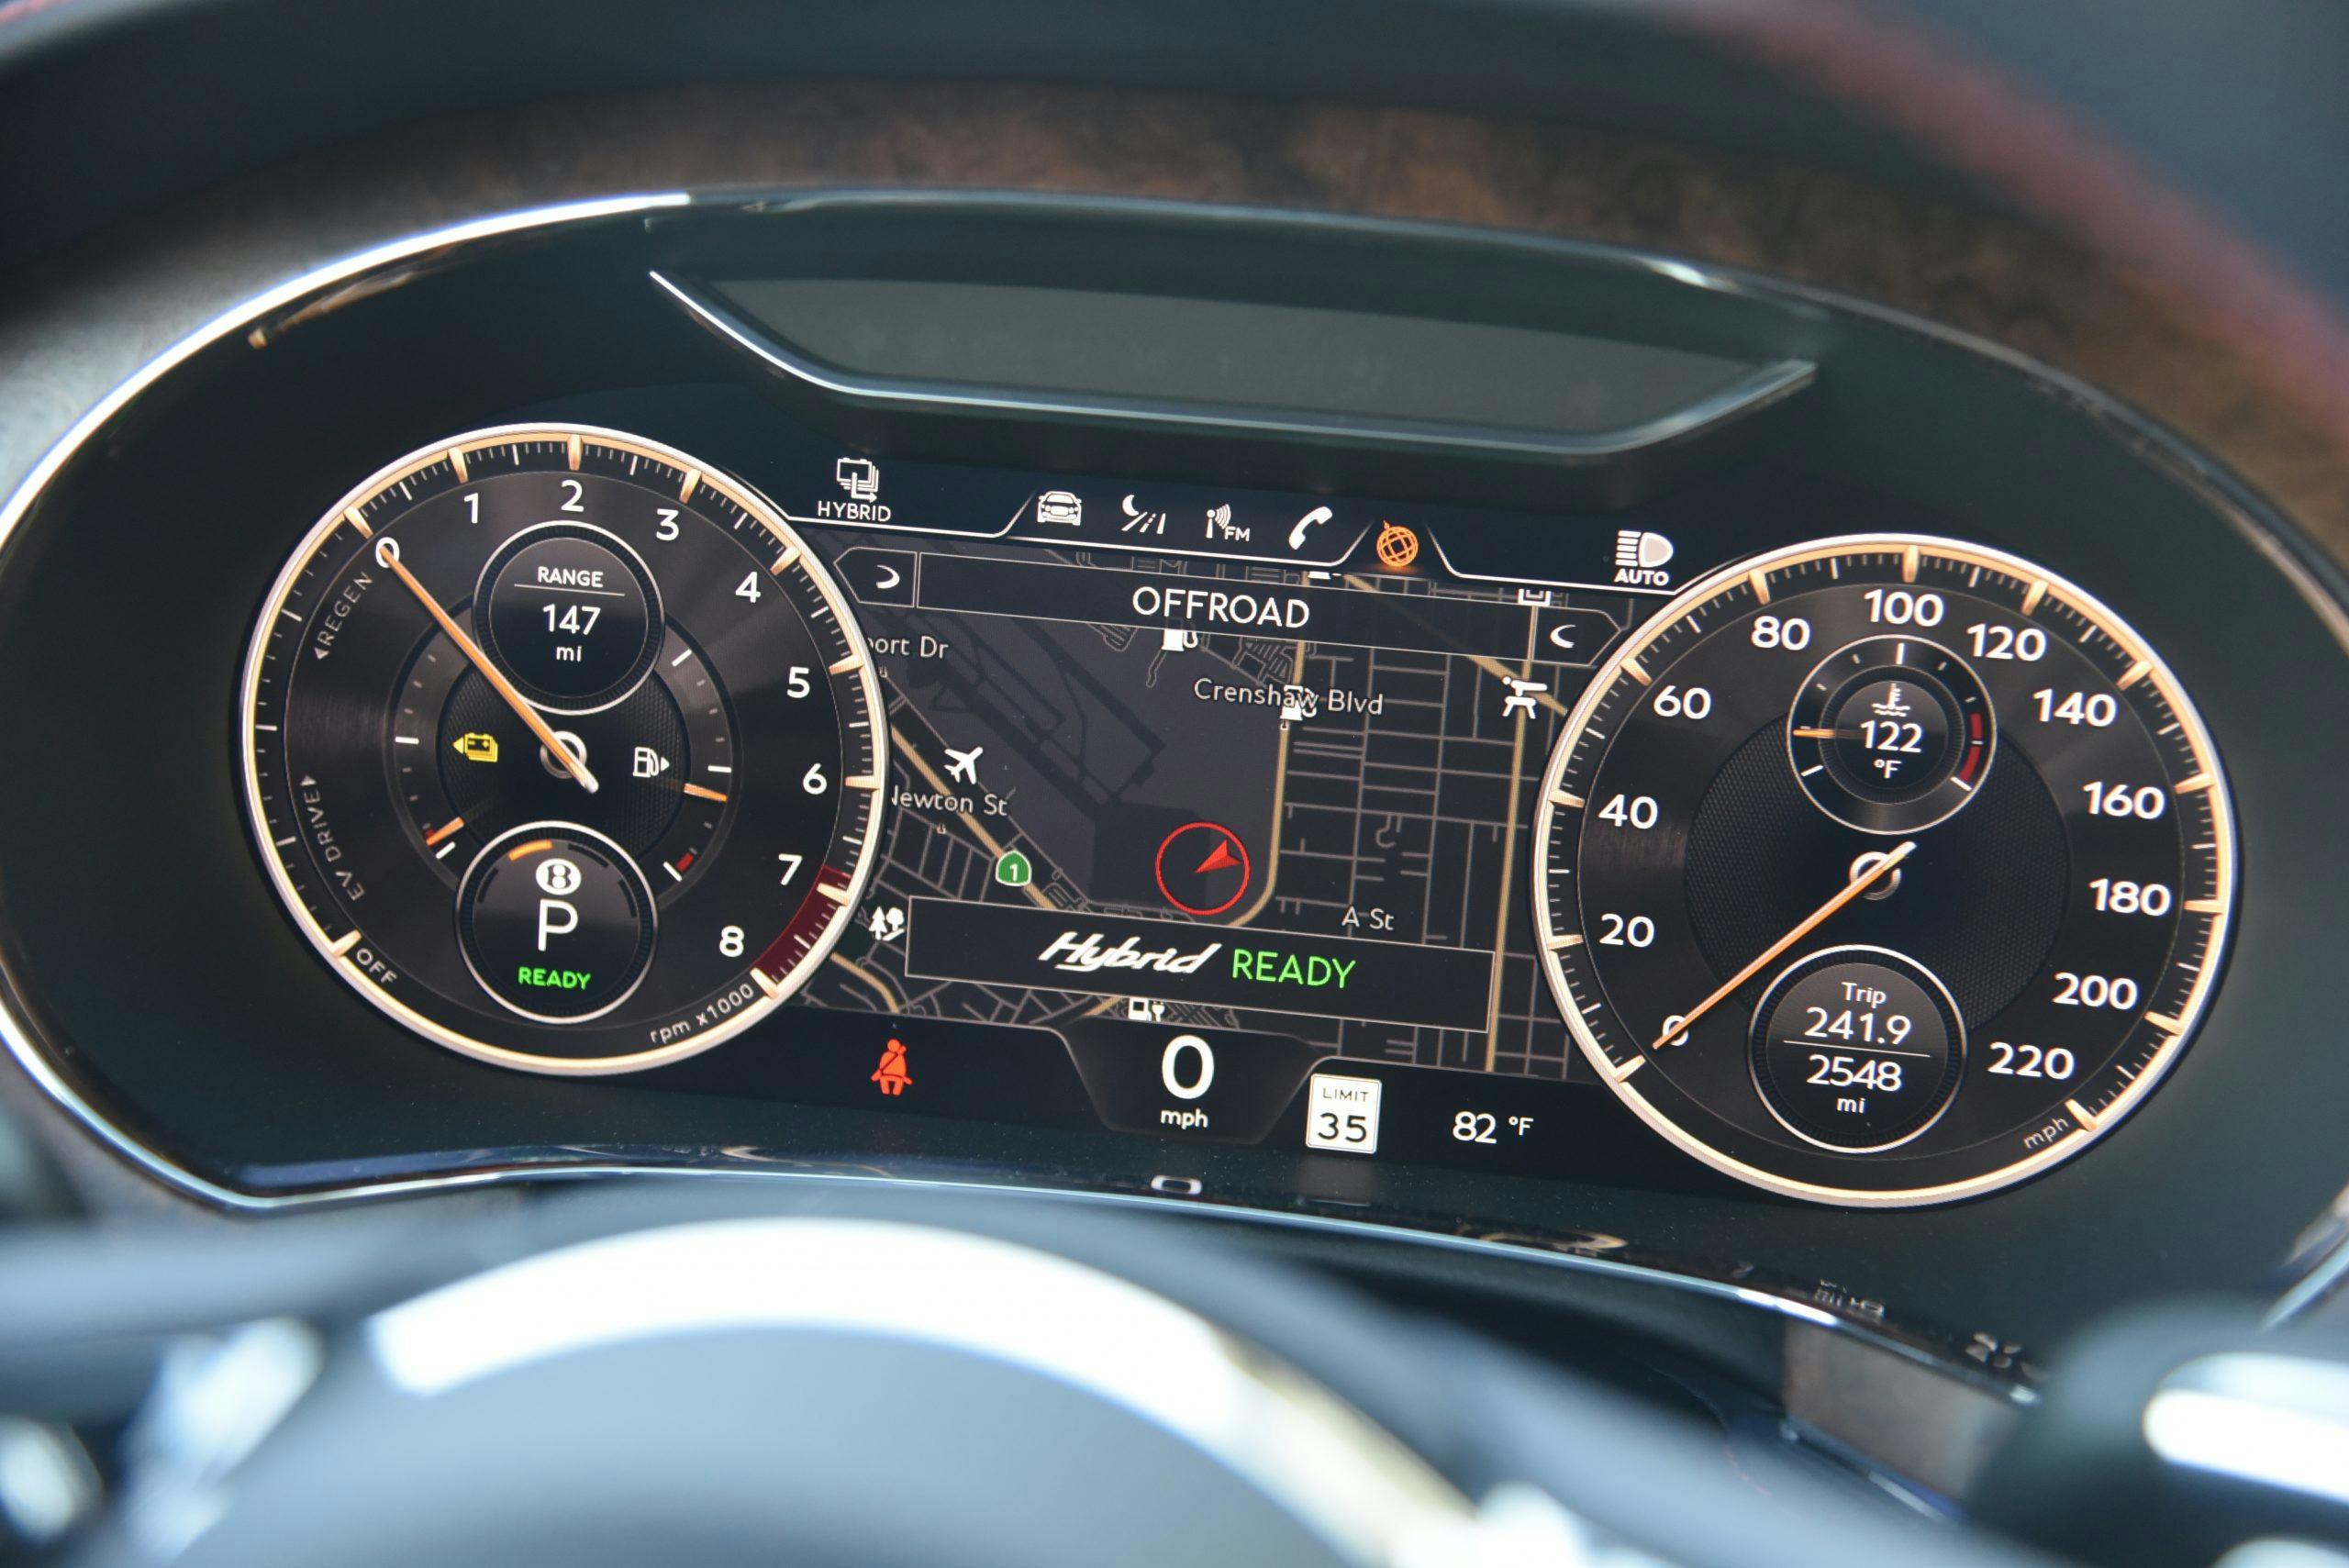 2022 Bentley Flying Spur Hybrid interior dash screen